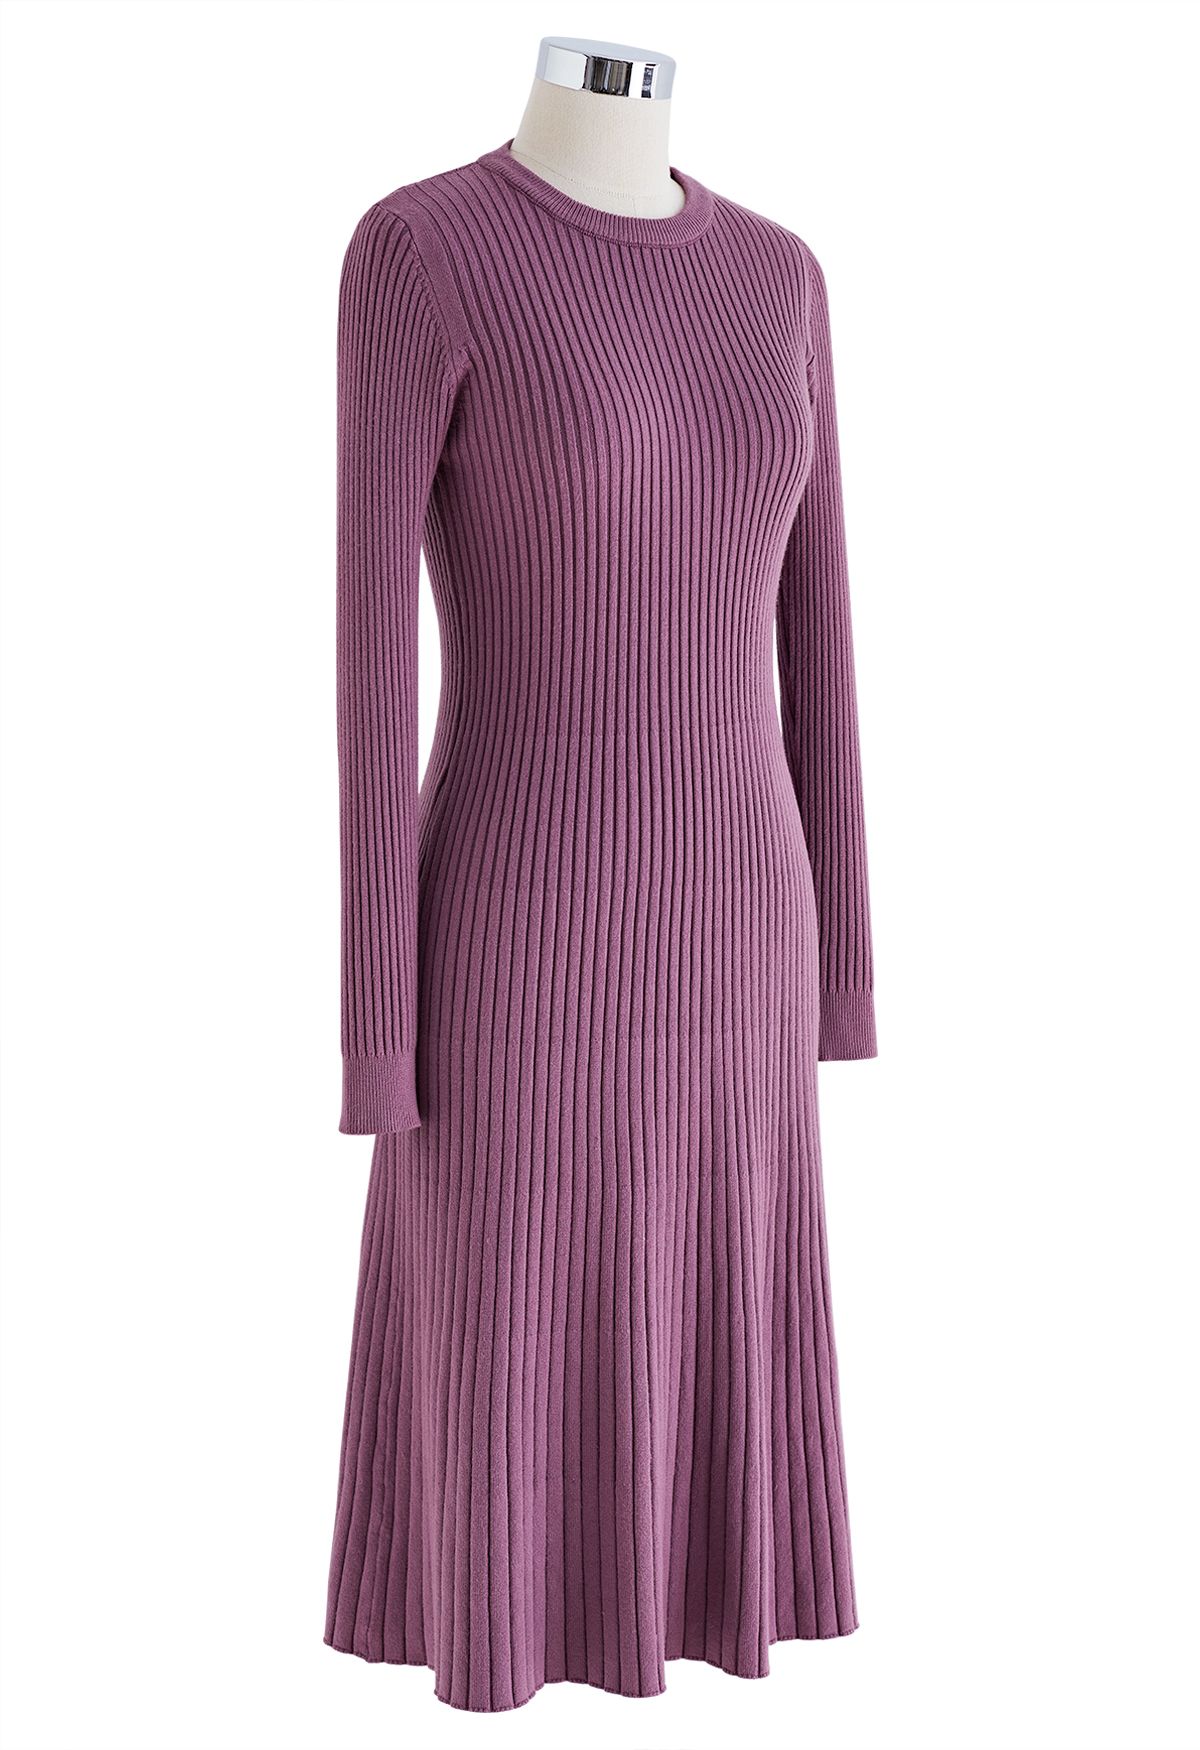 Ribbed Texture Frilling Midi Dress in Purple